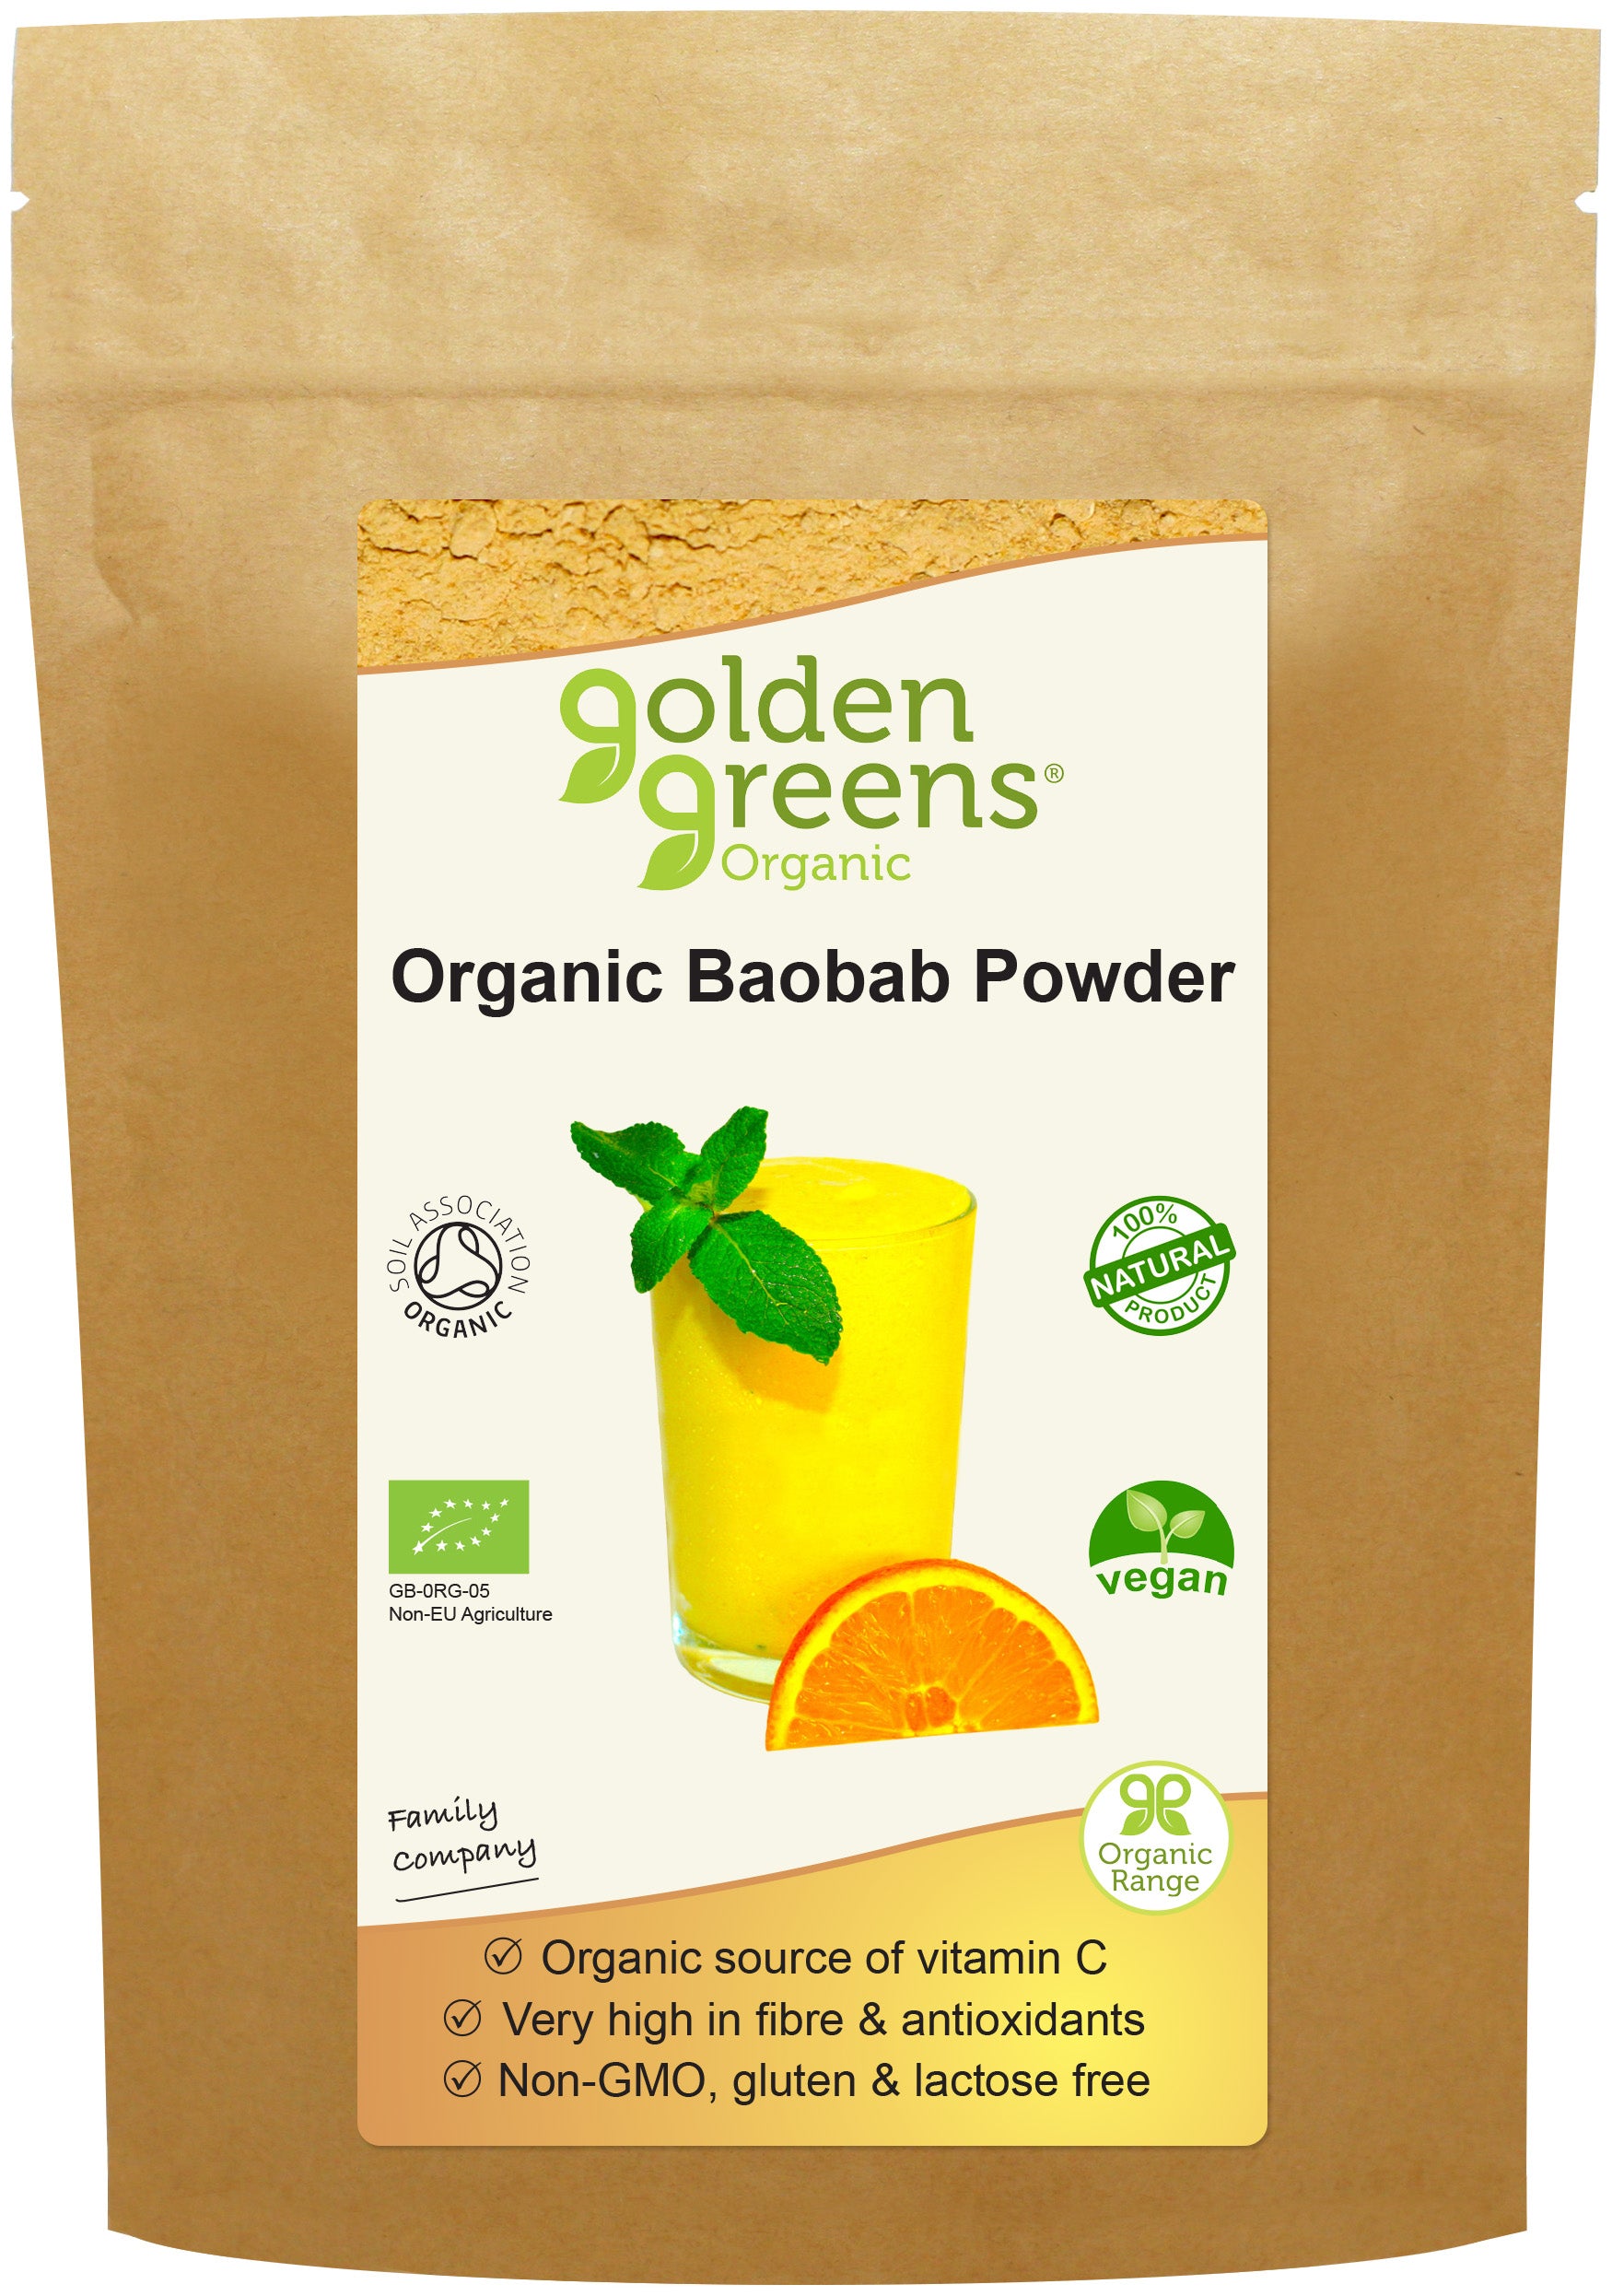 Golden Greens (Greens Organic) Organic Baobab Powder